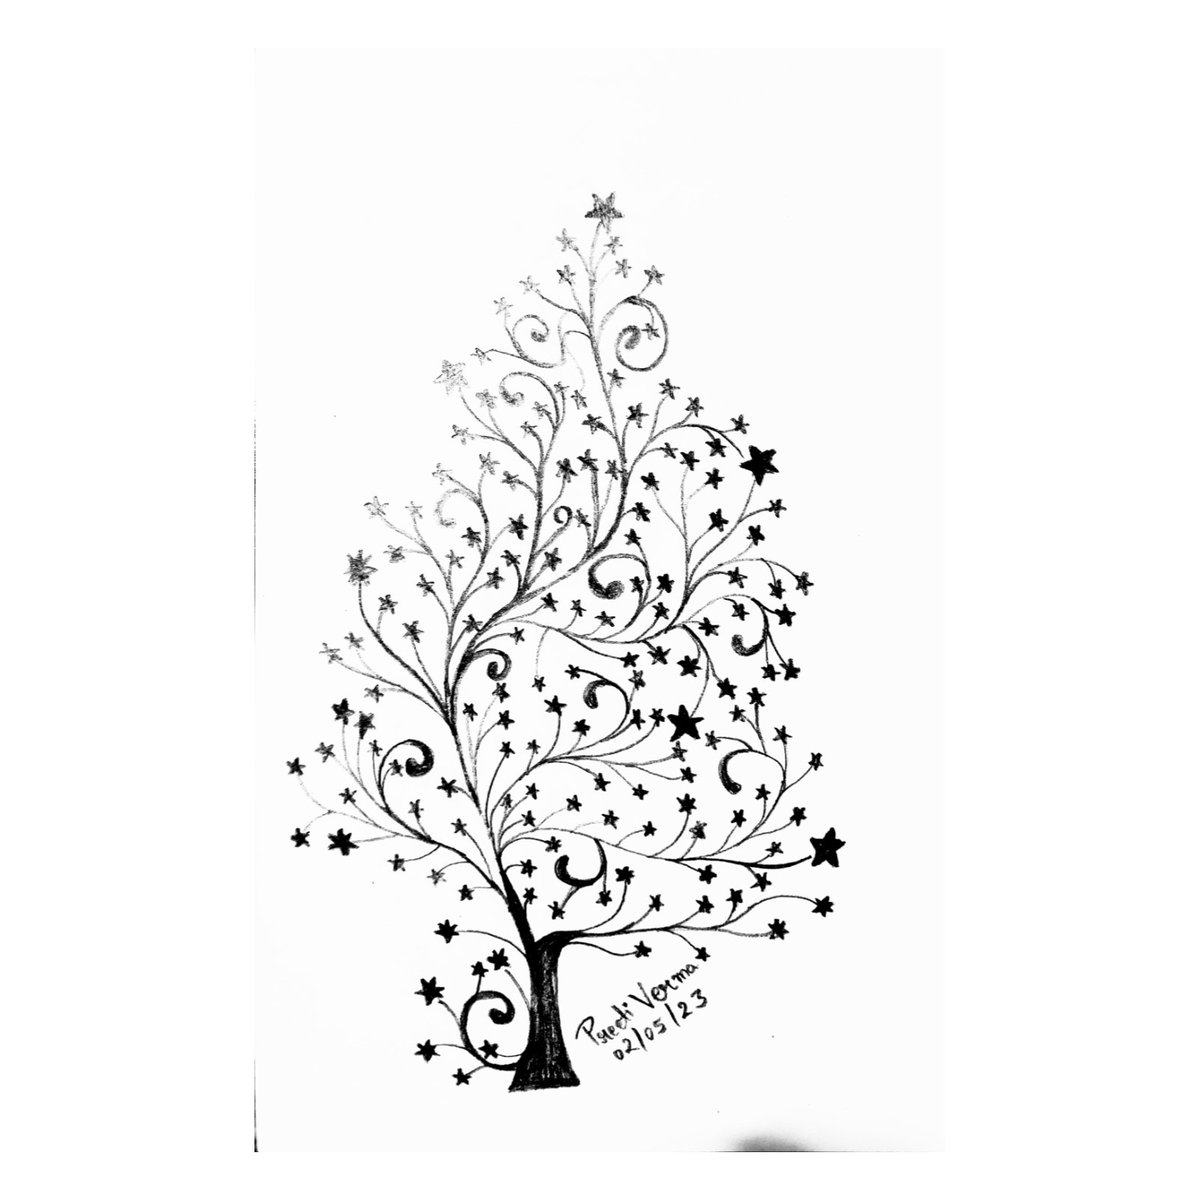 Pencil Tree sketch art
.
.
.
.
#art #artist #pencil #pencildrawing #pencilart #pencilsketch #artgallery #artdaily #tree #treedesign #treesketch #treepainting #preetipaintings #artoftheday #sketchoftheday #drawingoftheday #paintingoftheday #explorepage  #exploremore #Twitter